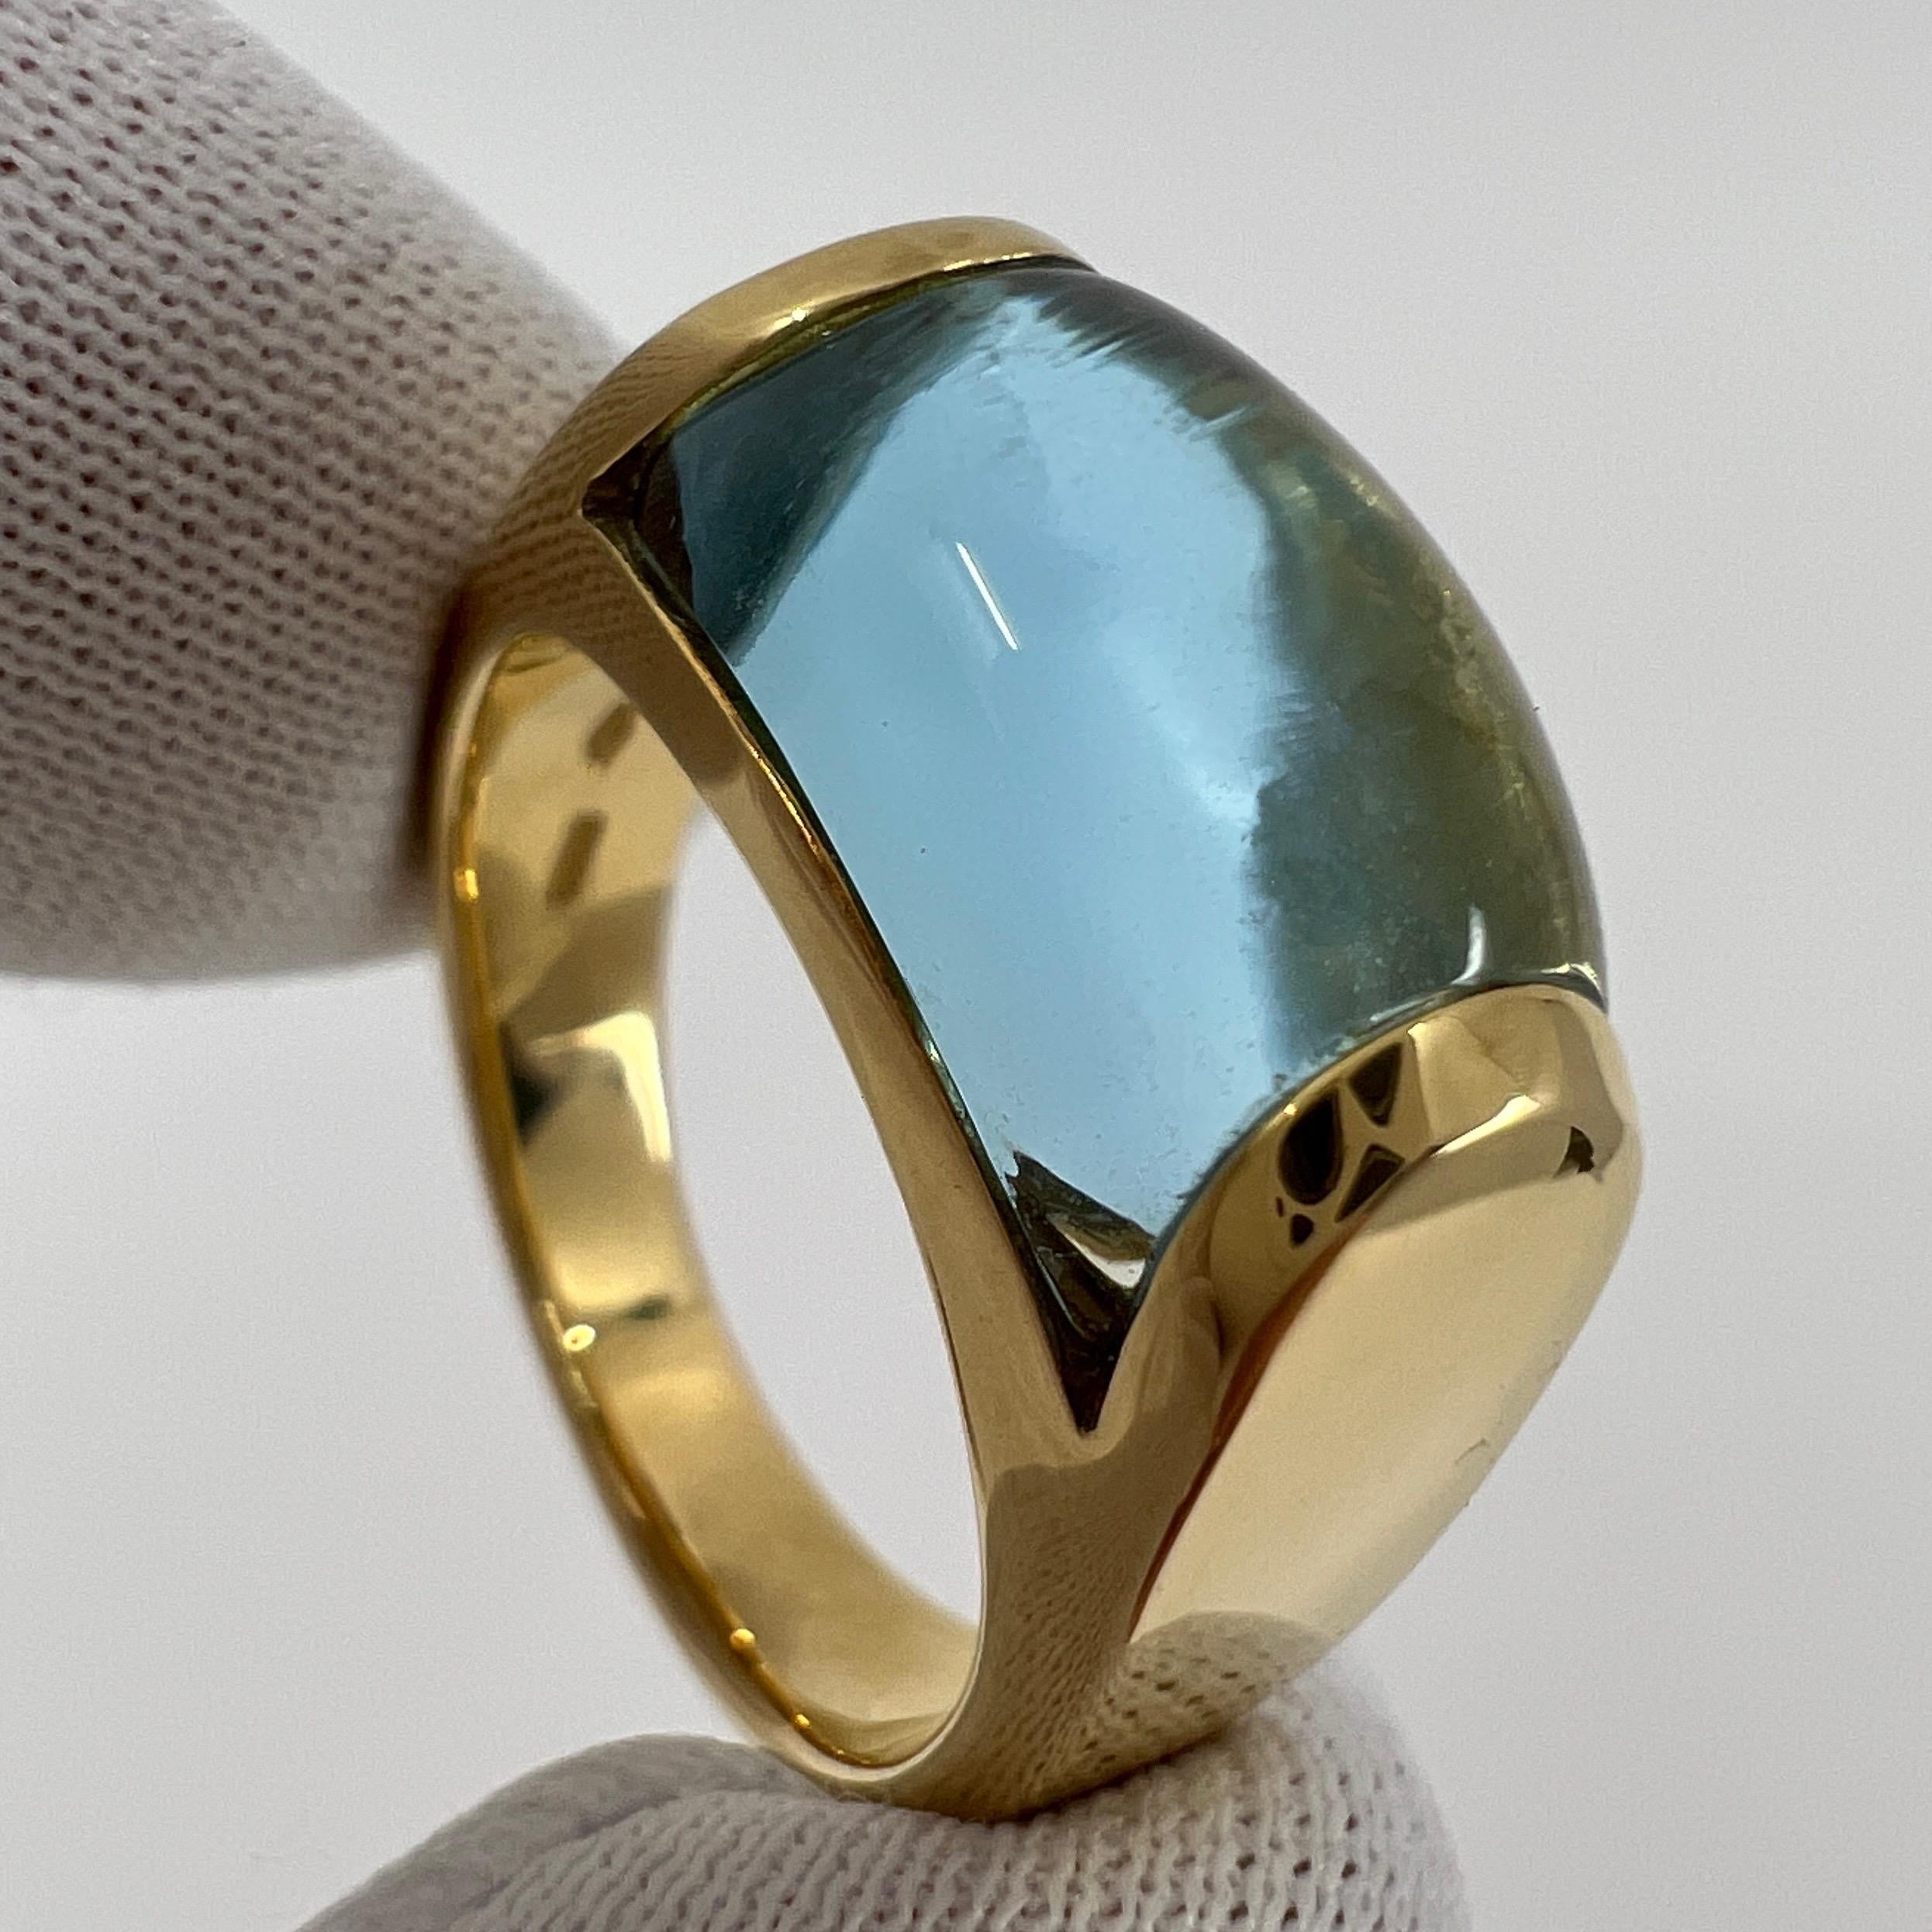 Vintage Bvlgari Tronchetto 18k Yellow Gold Blue Topaz Dome Ring with Box 4